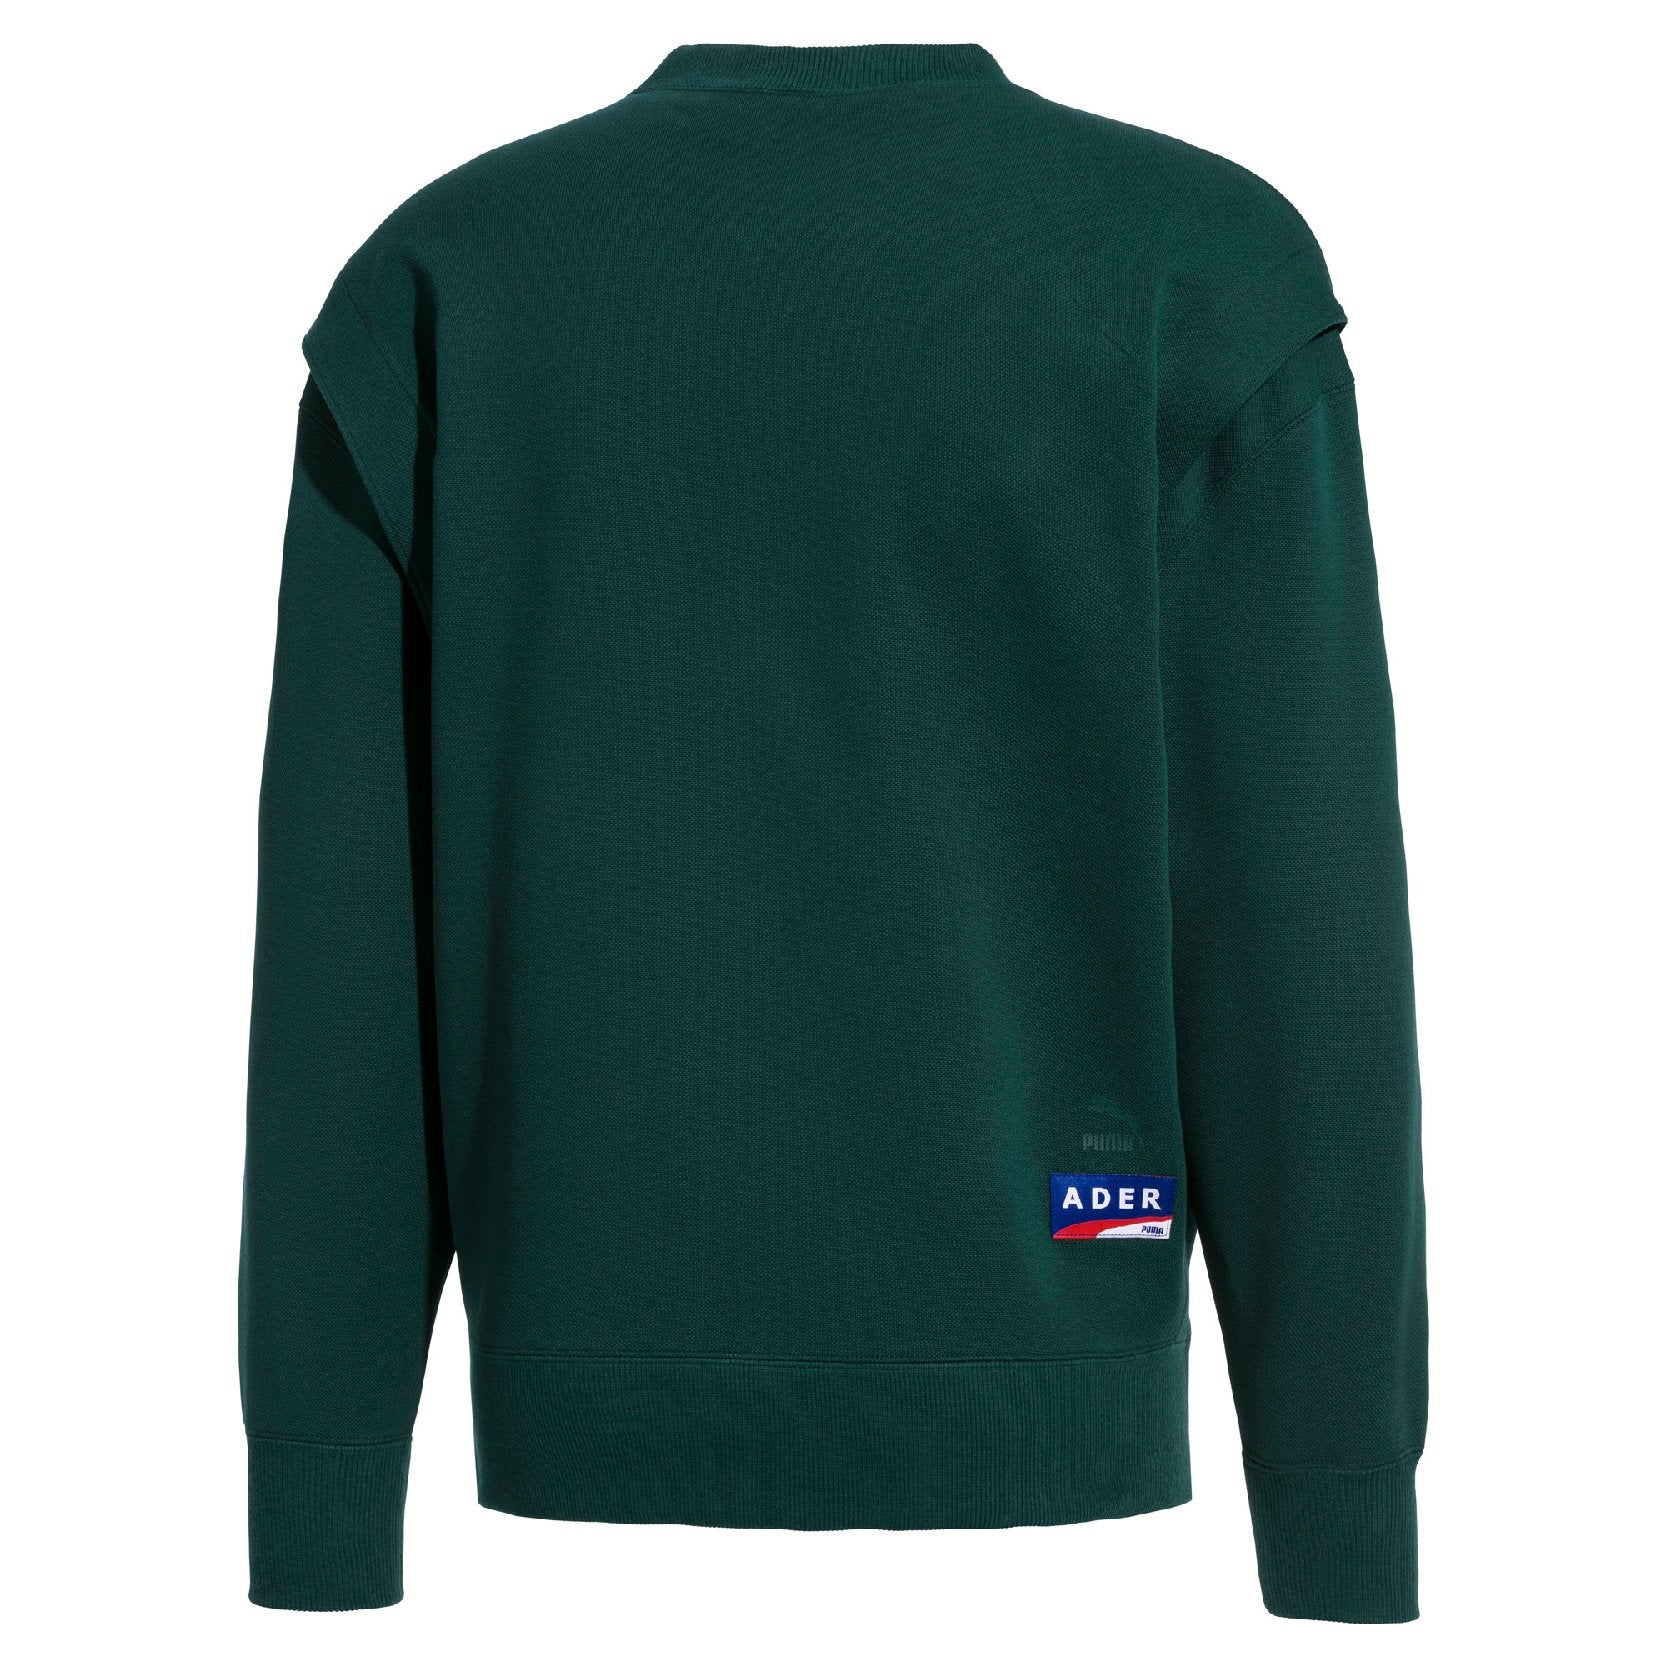 puma green sweater